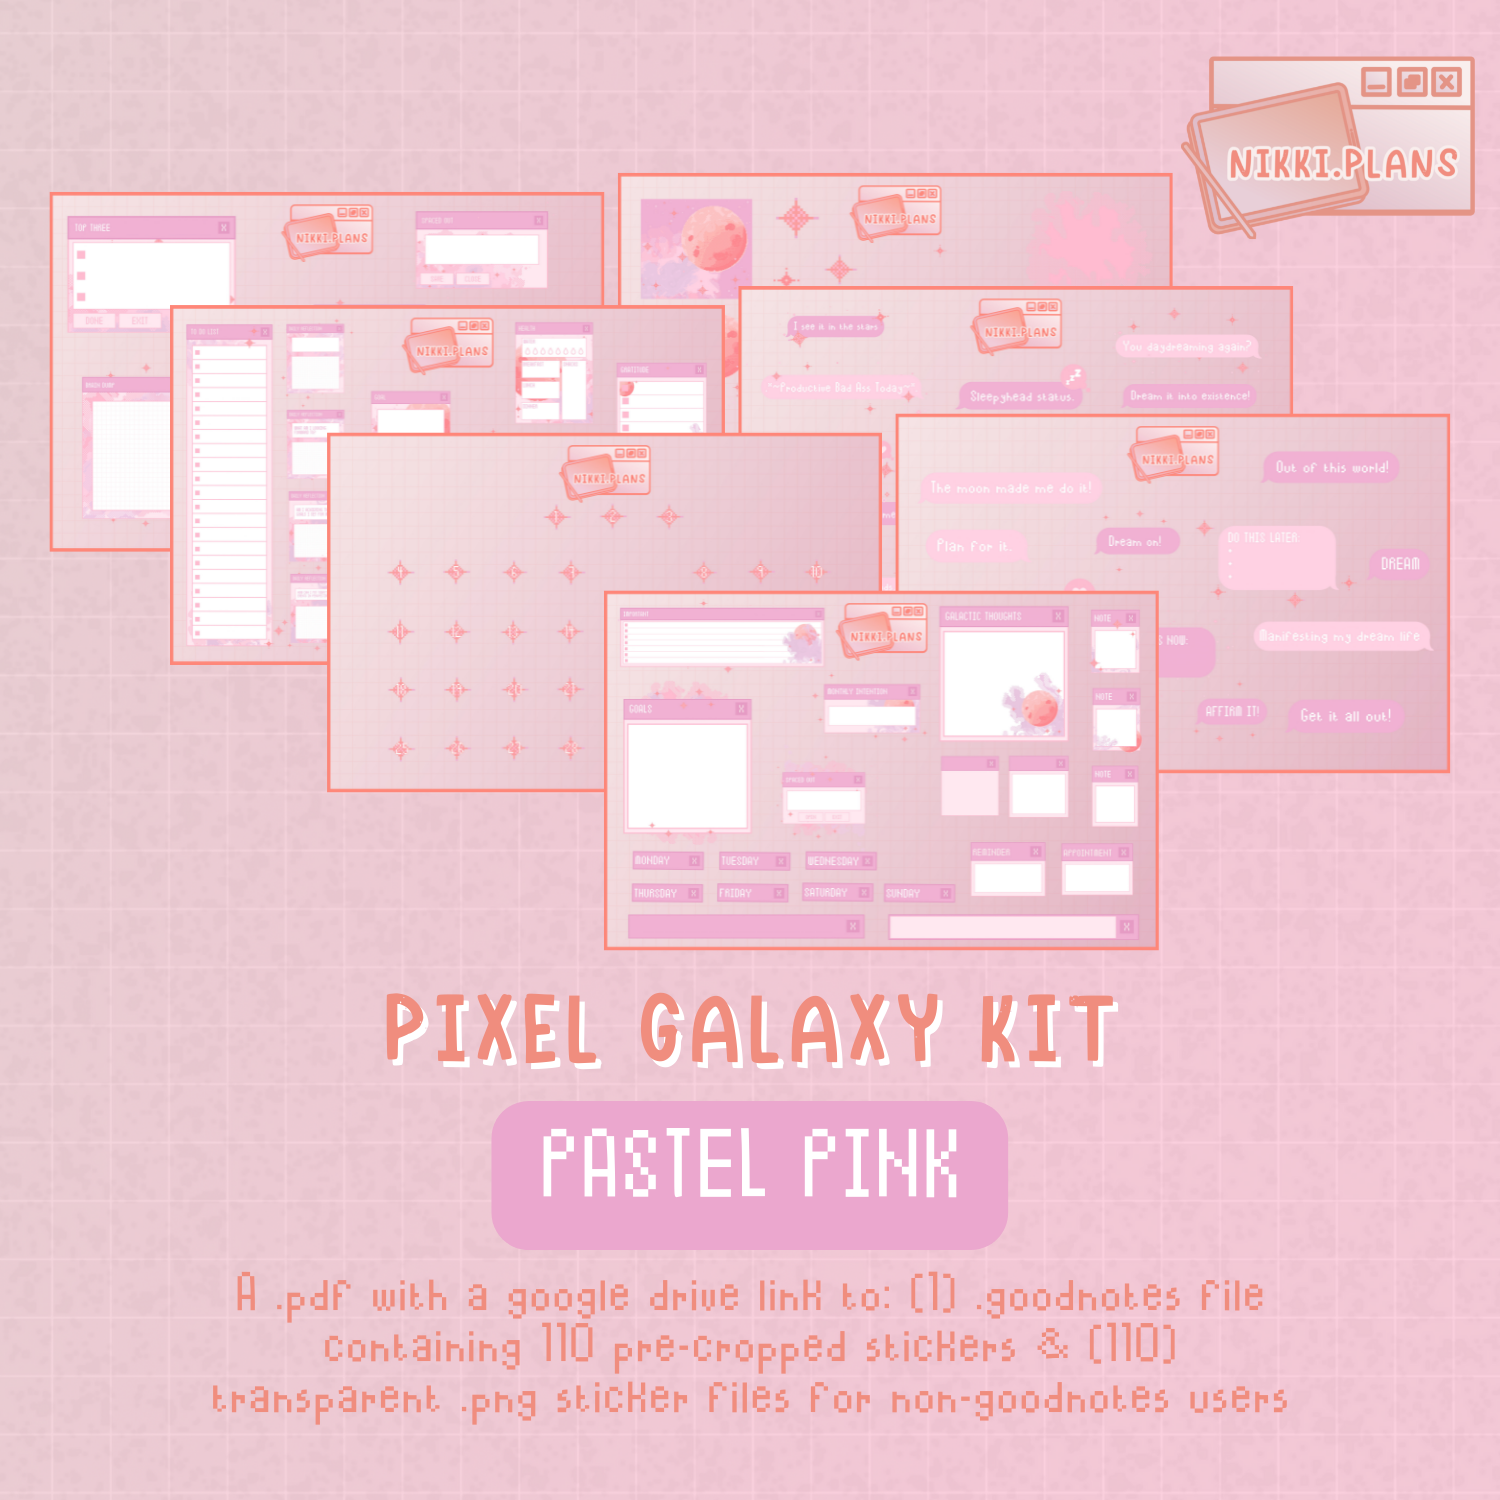 Pastel ♥ Aesthetic ♥ Pink ♥ Kawaii